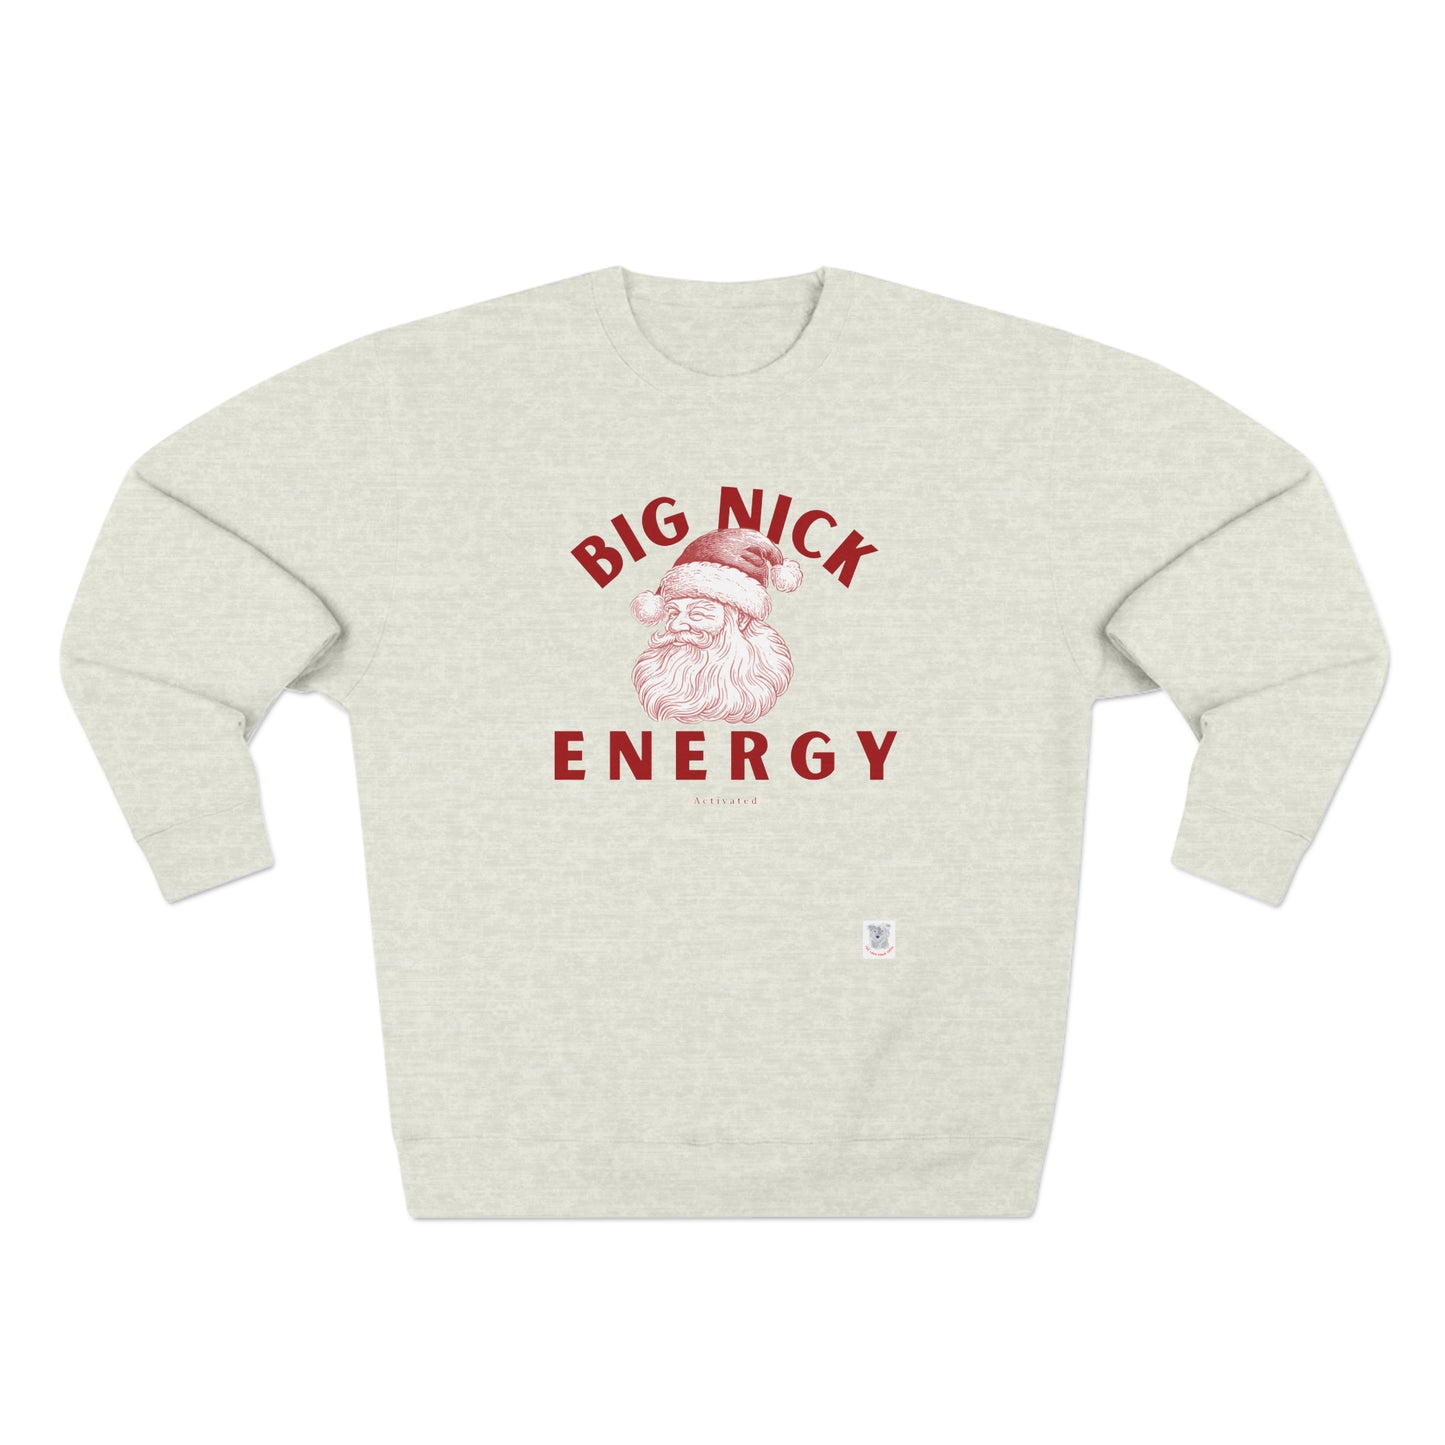 Copy of Big Nick Energy